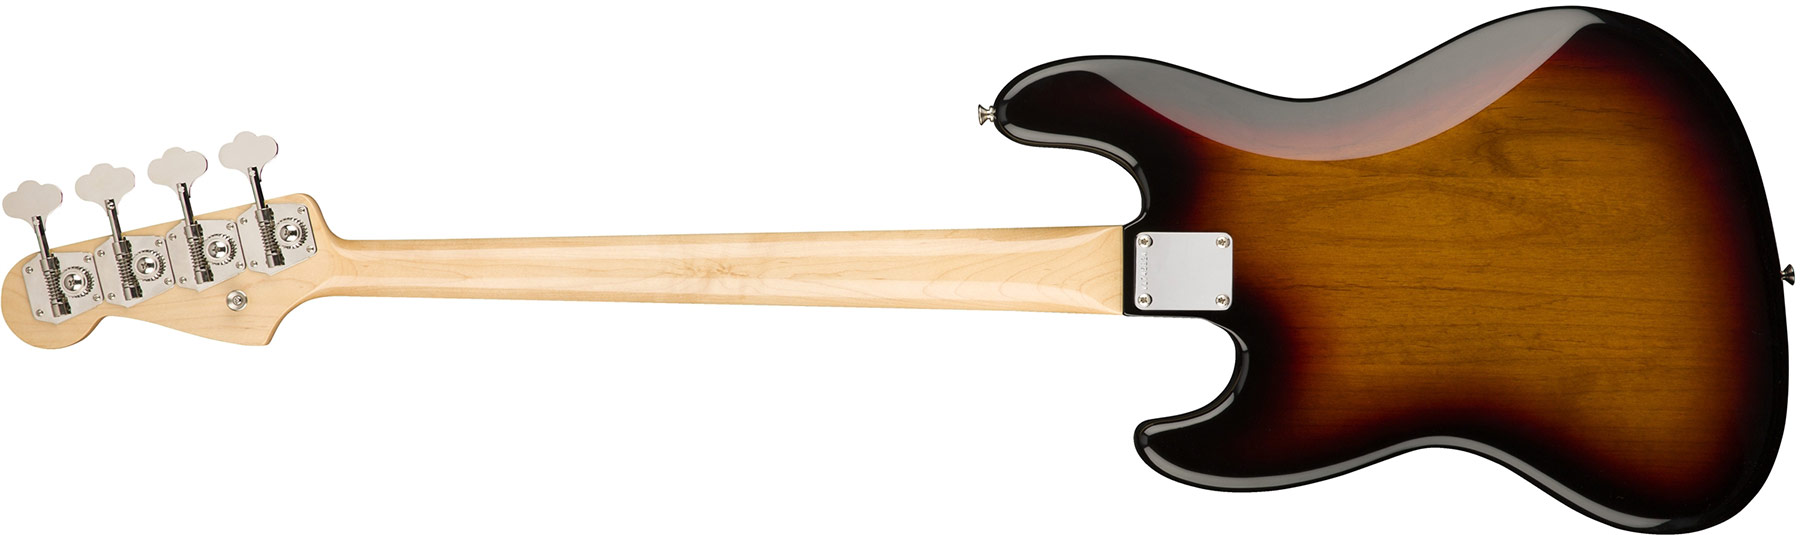 Fender Jazz Bass '60s American Original Usa Rw - 3-color Sunburst - Basse Électrique Solid Body - Variation 1